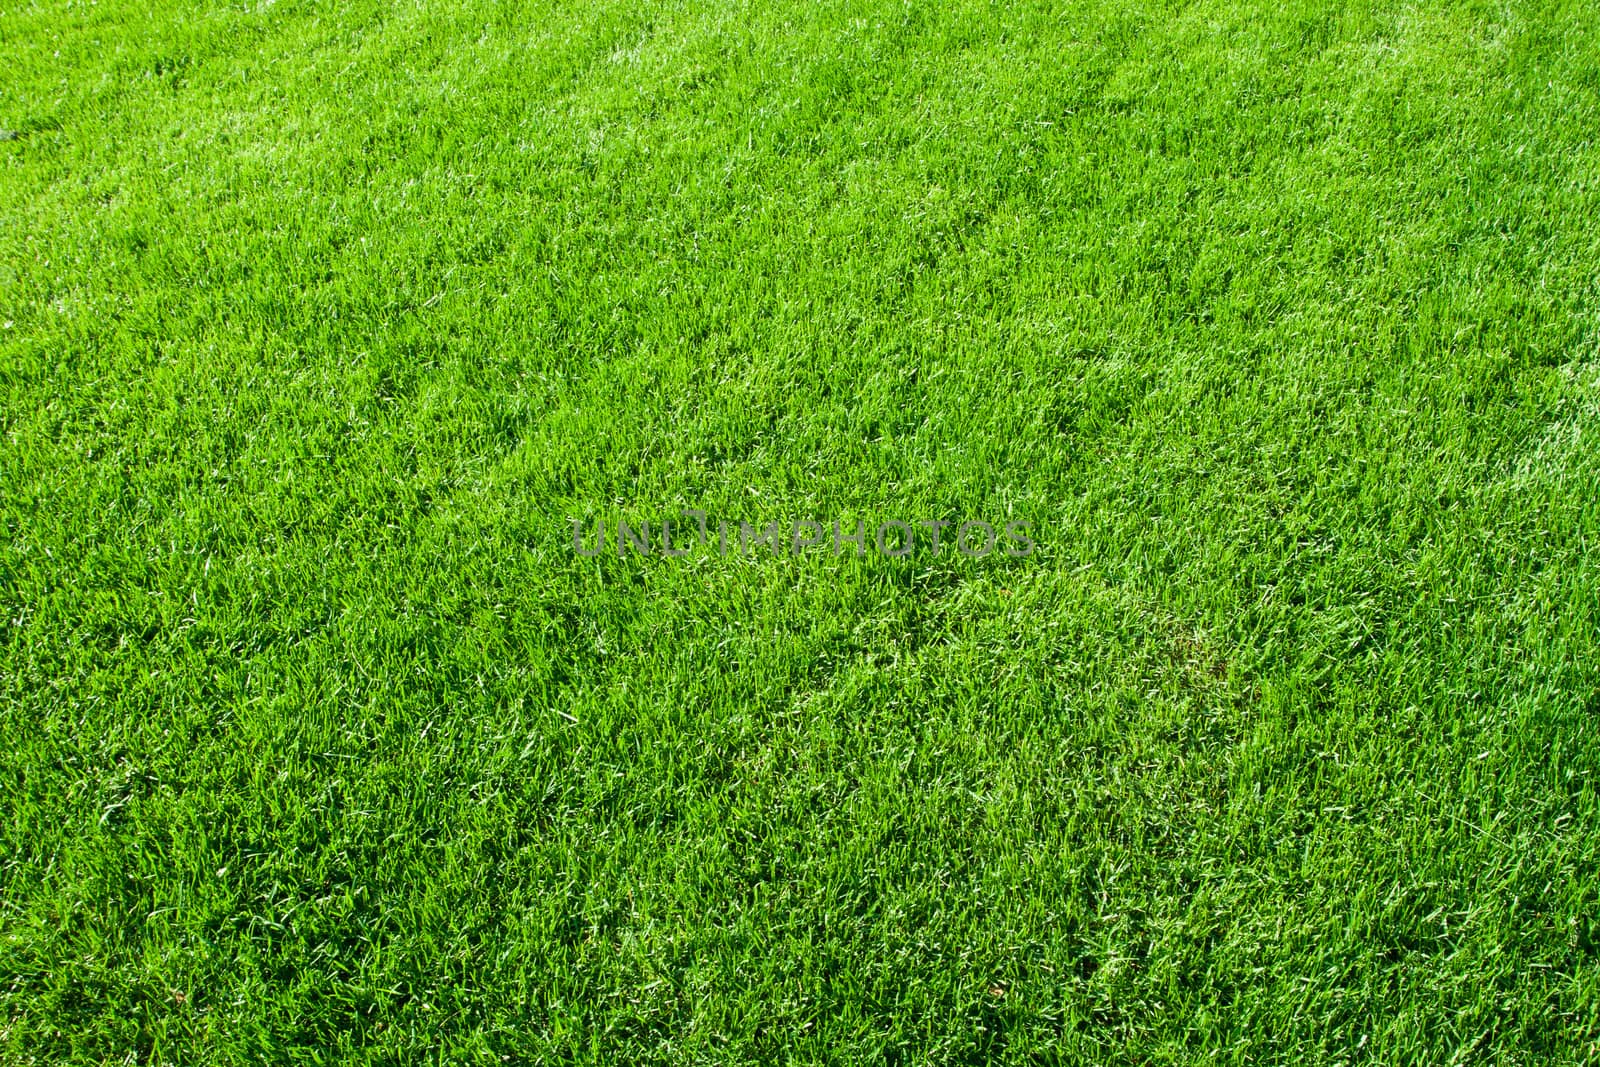 Green lush grass background under bright sunlight